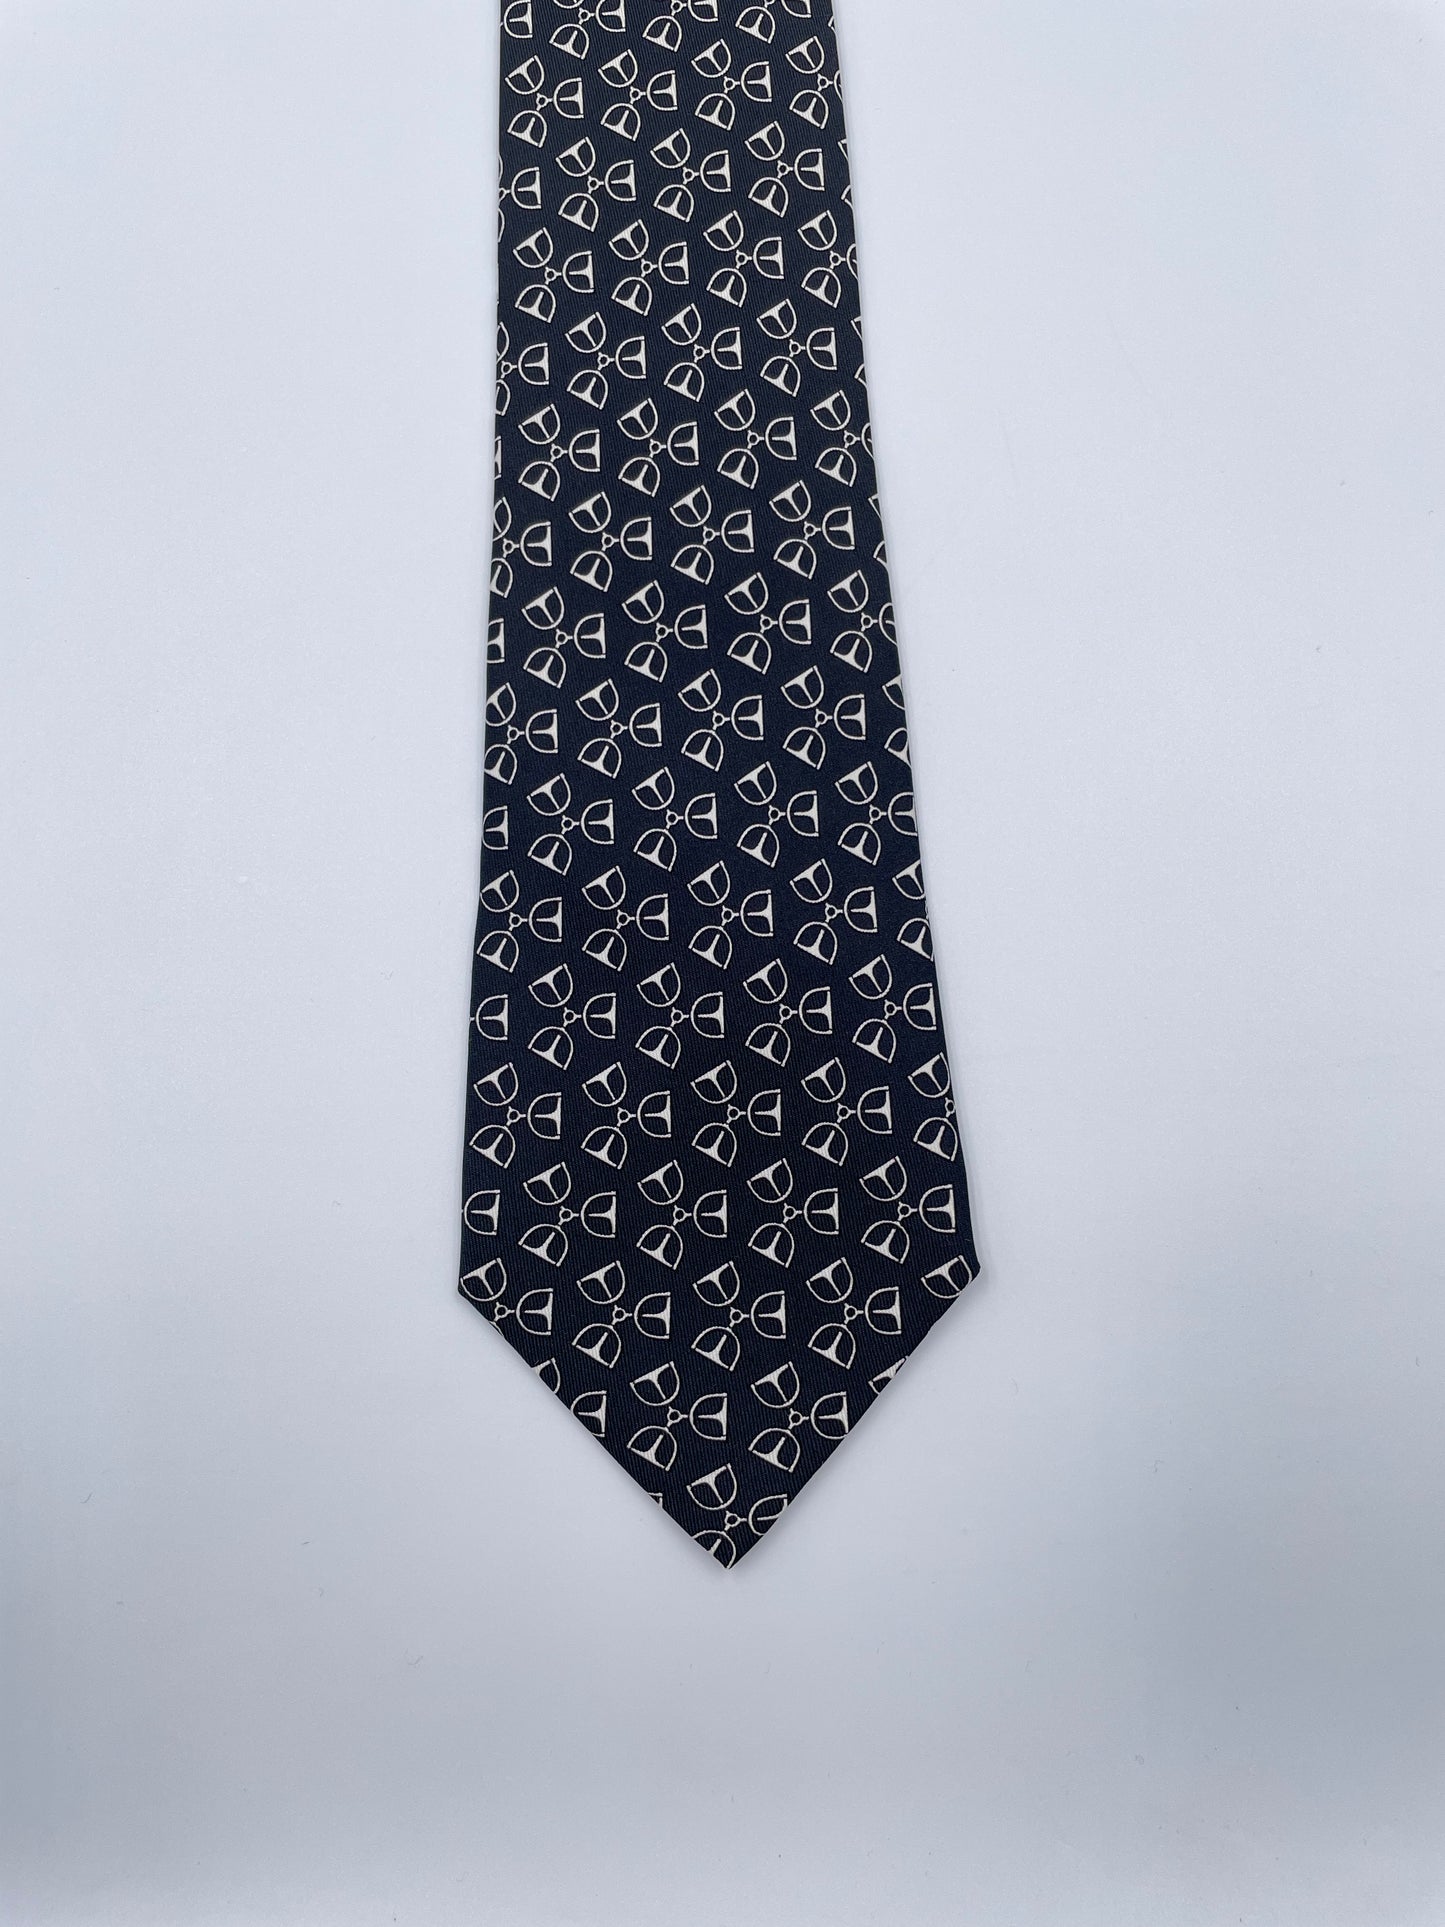 Cravatta Hermès stampa briglie sfondo nero c.7479IA